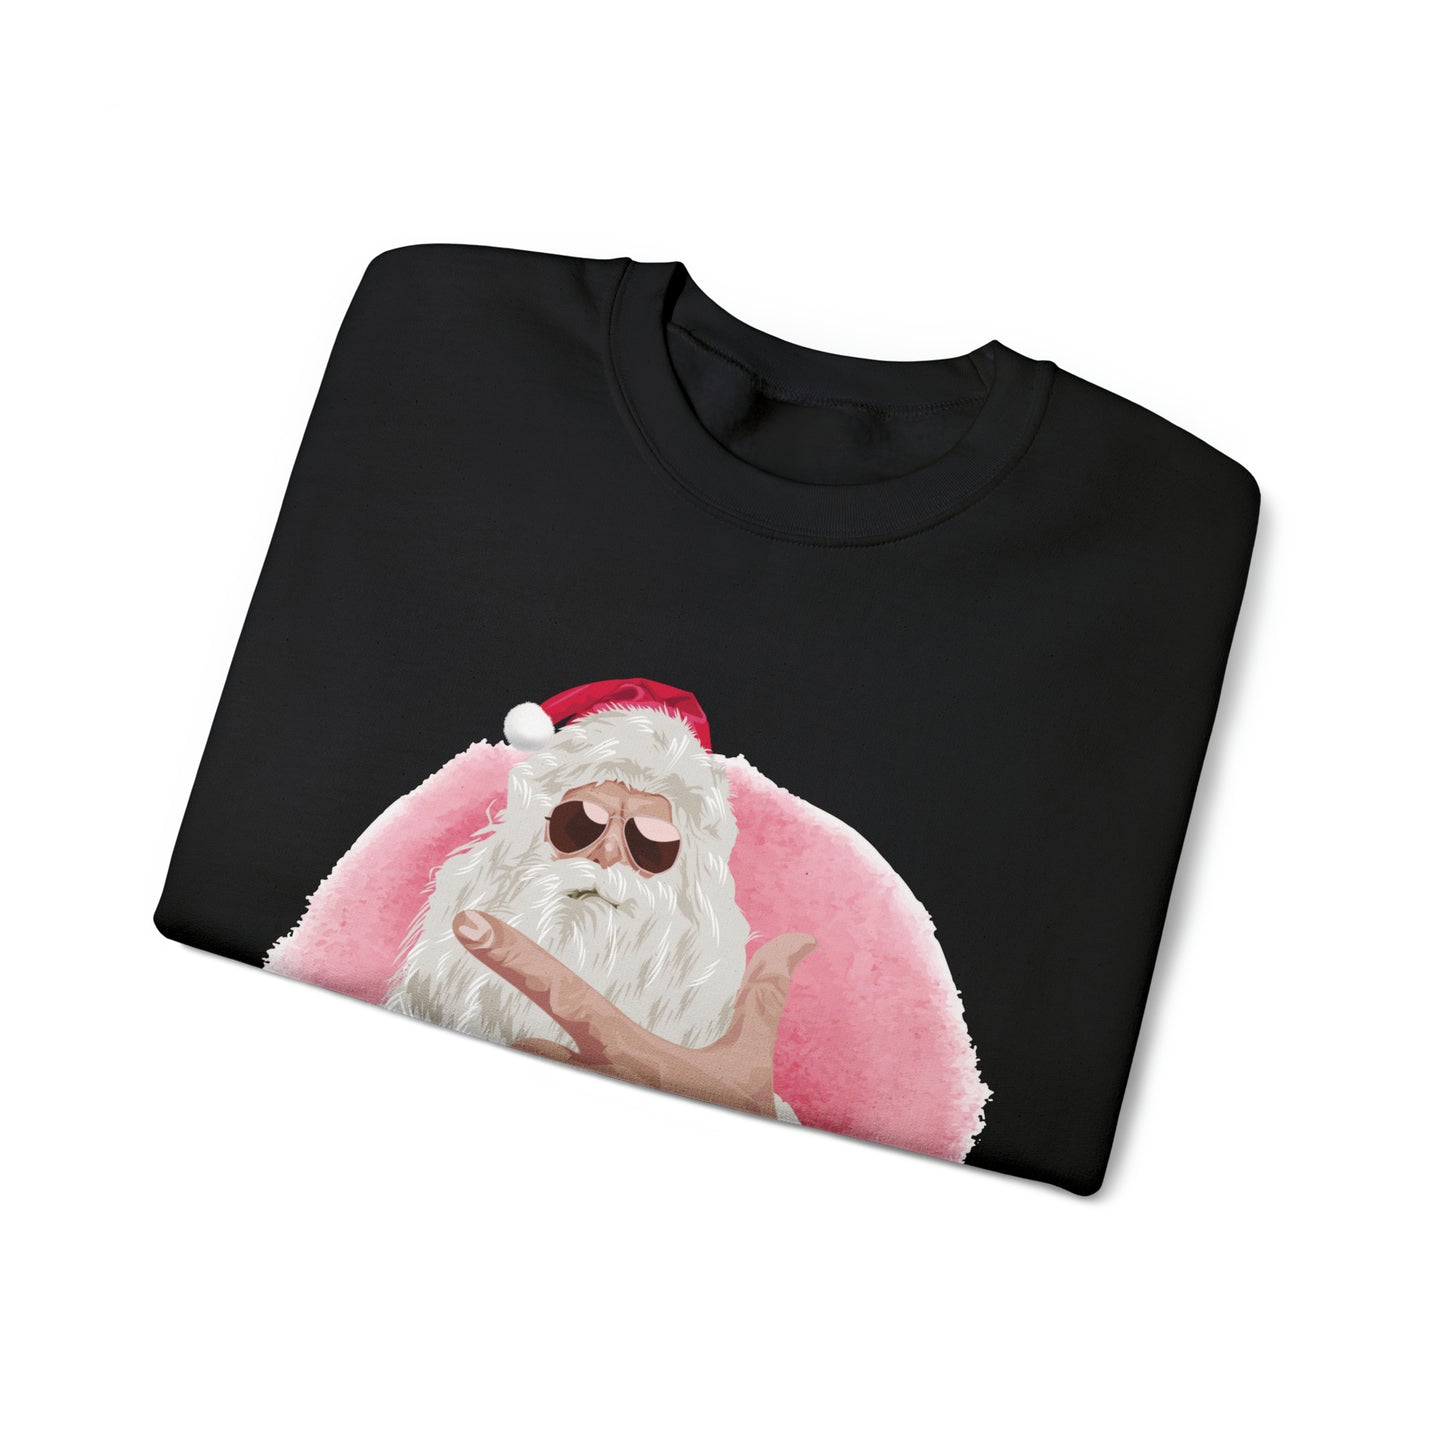 Unisex Heavy Blend™ Crewneck Sweatshirt Rock Santa Christmas gift, ugly sweater